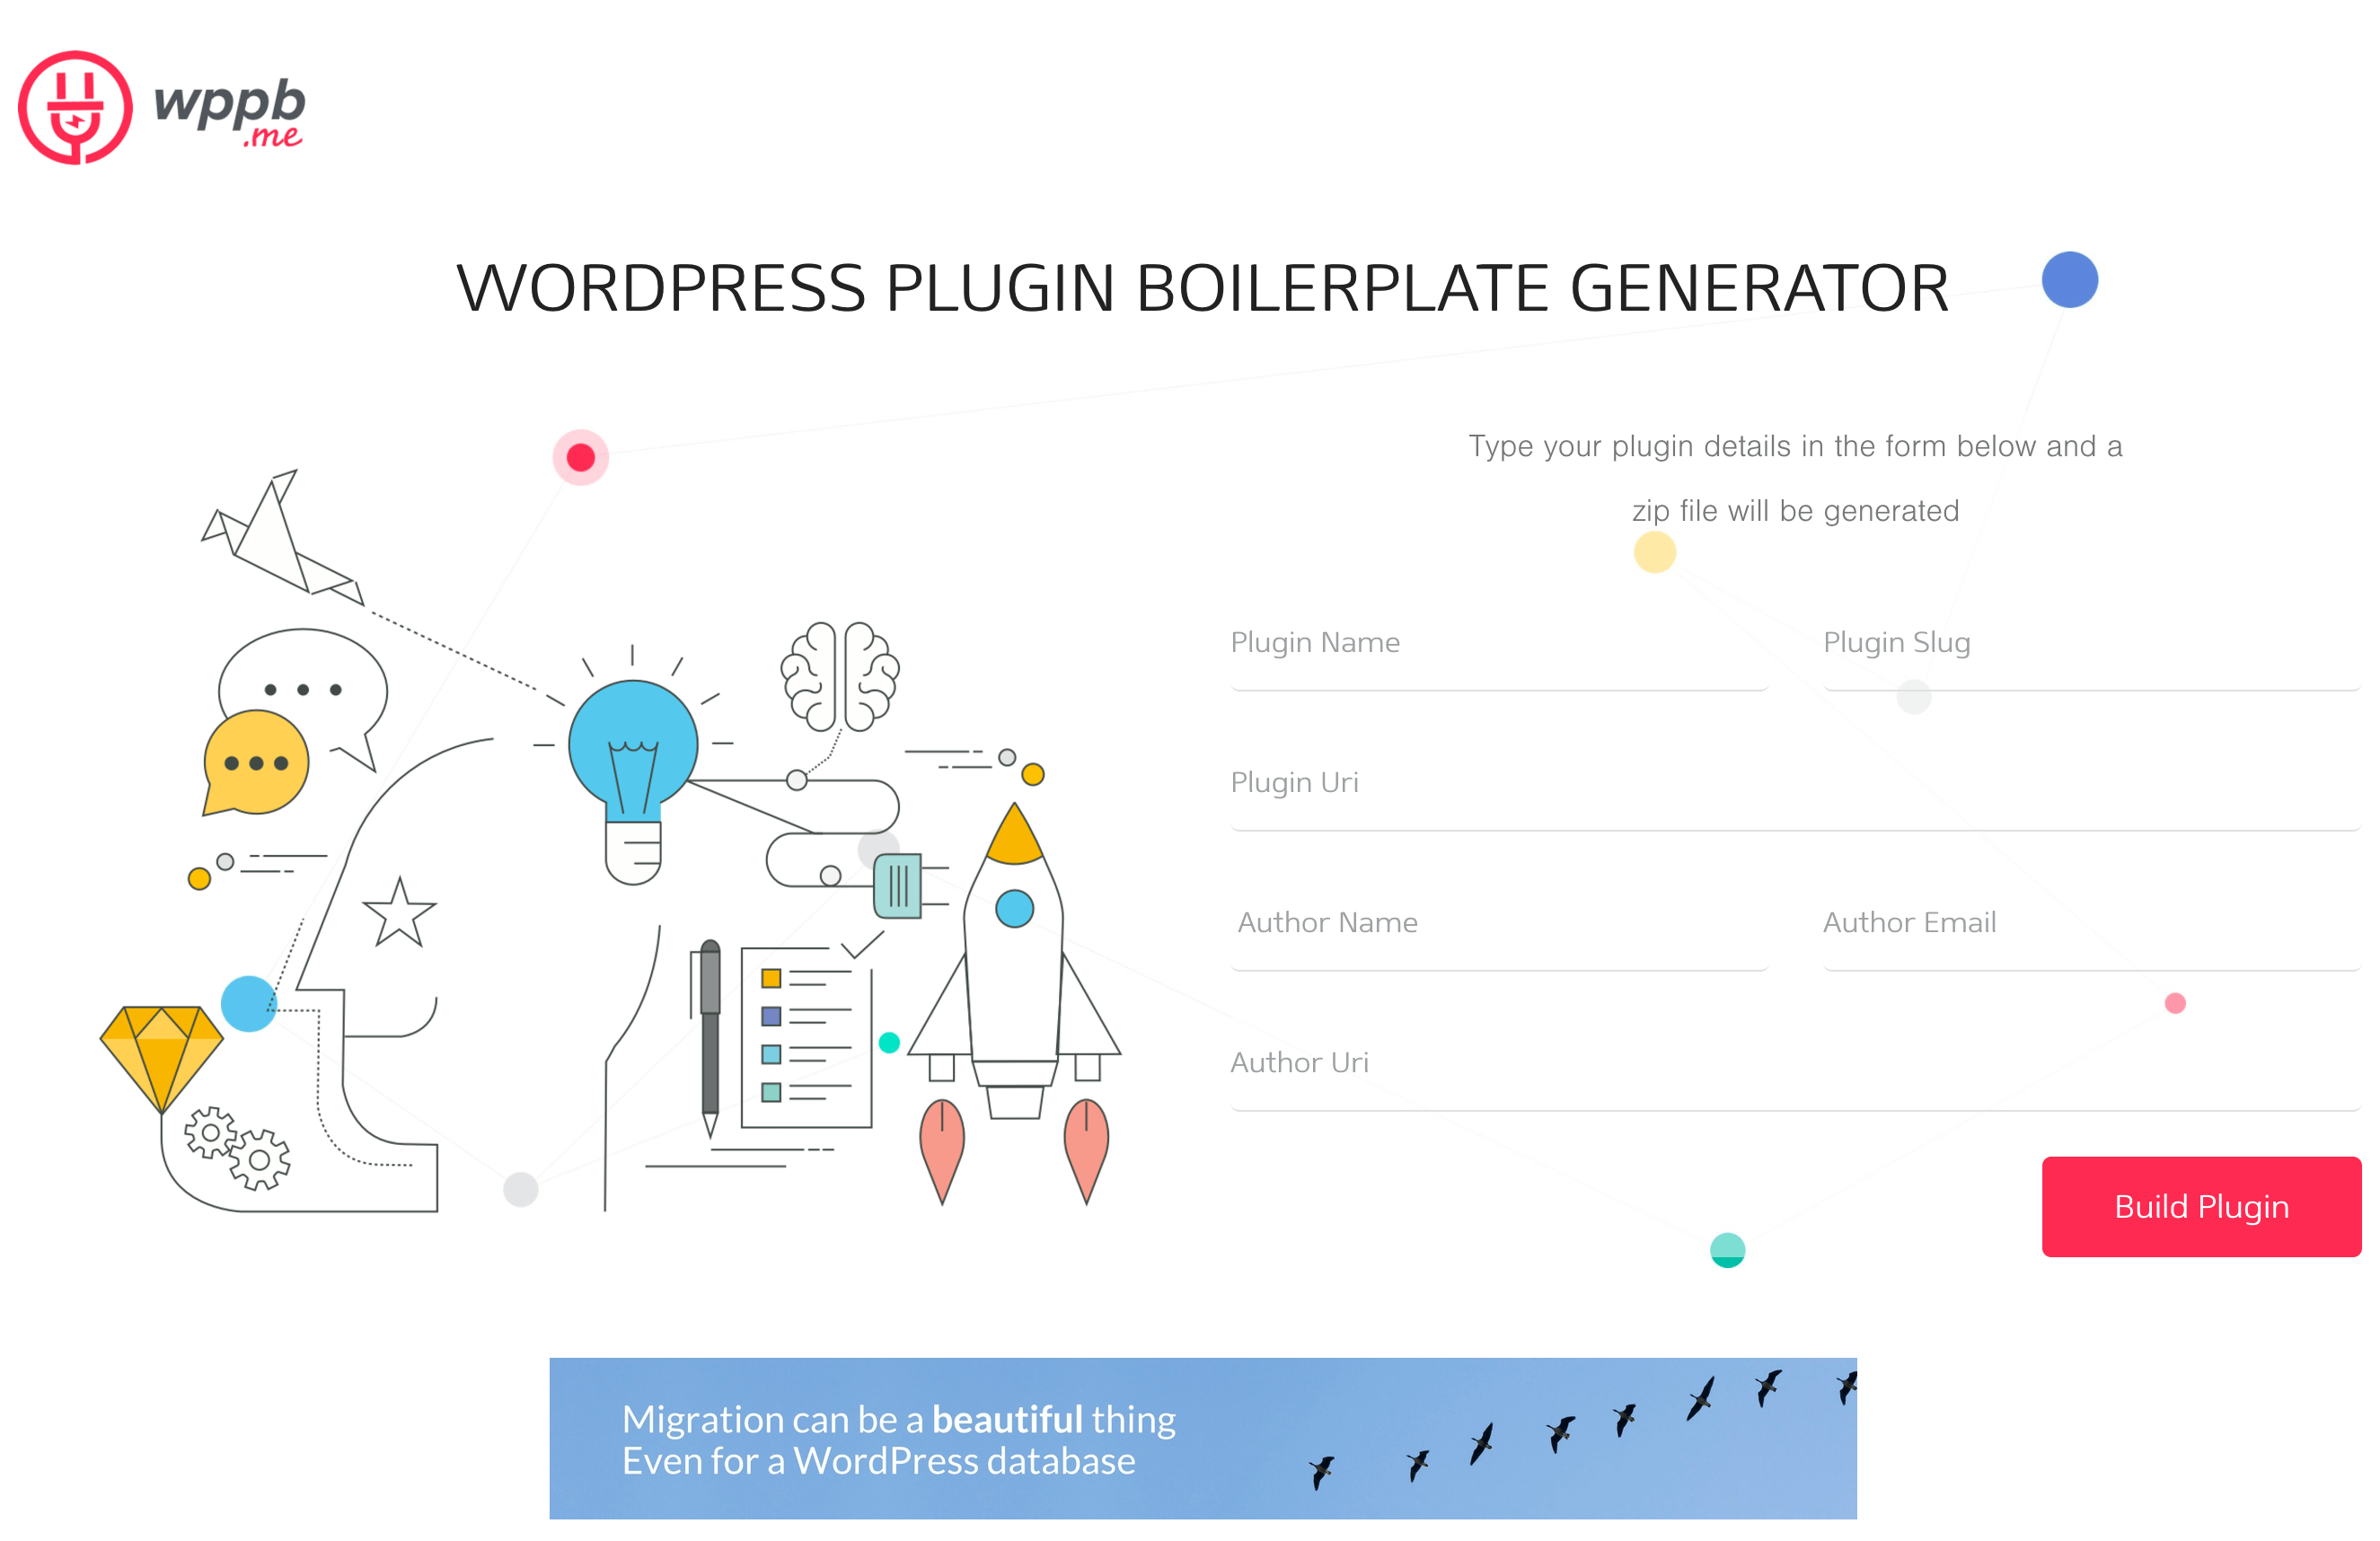 The WordPress Plugin Boilerplate home page.